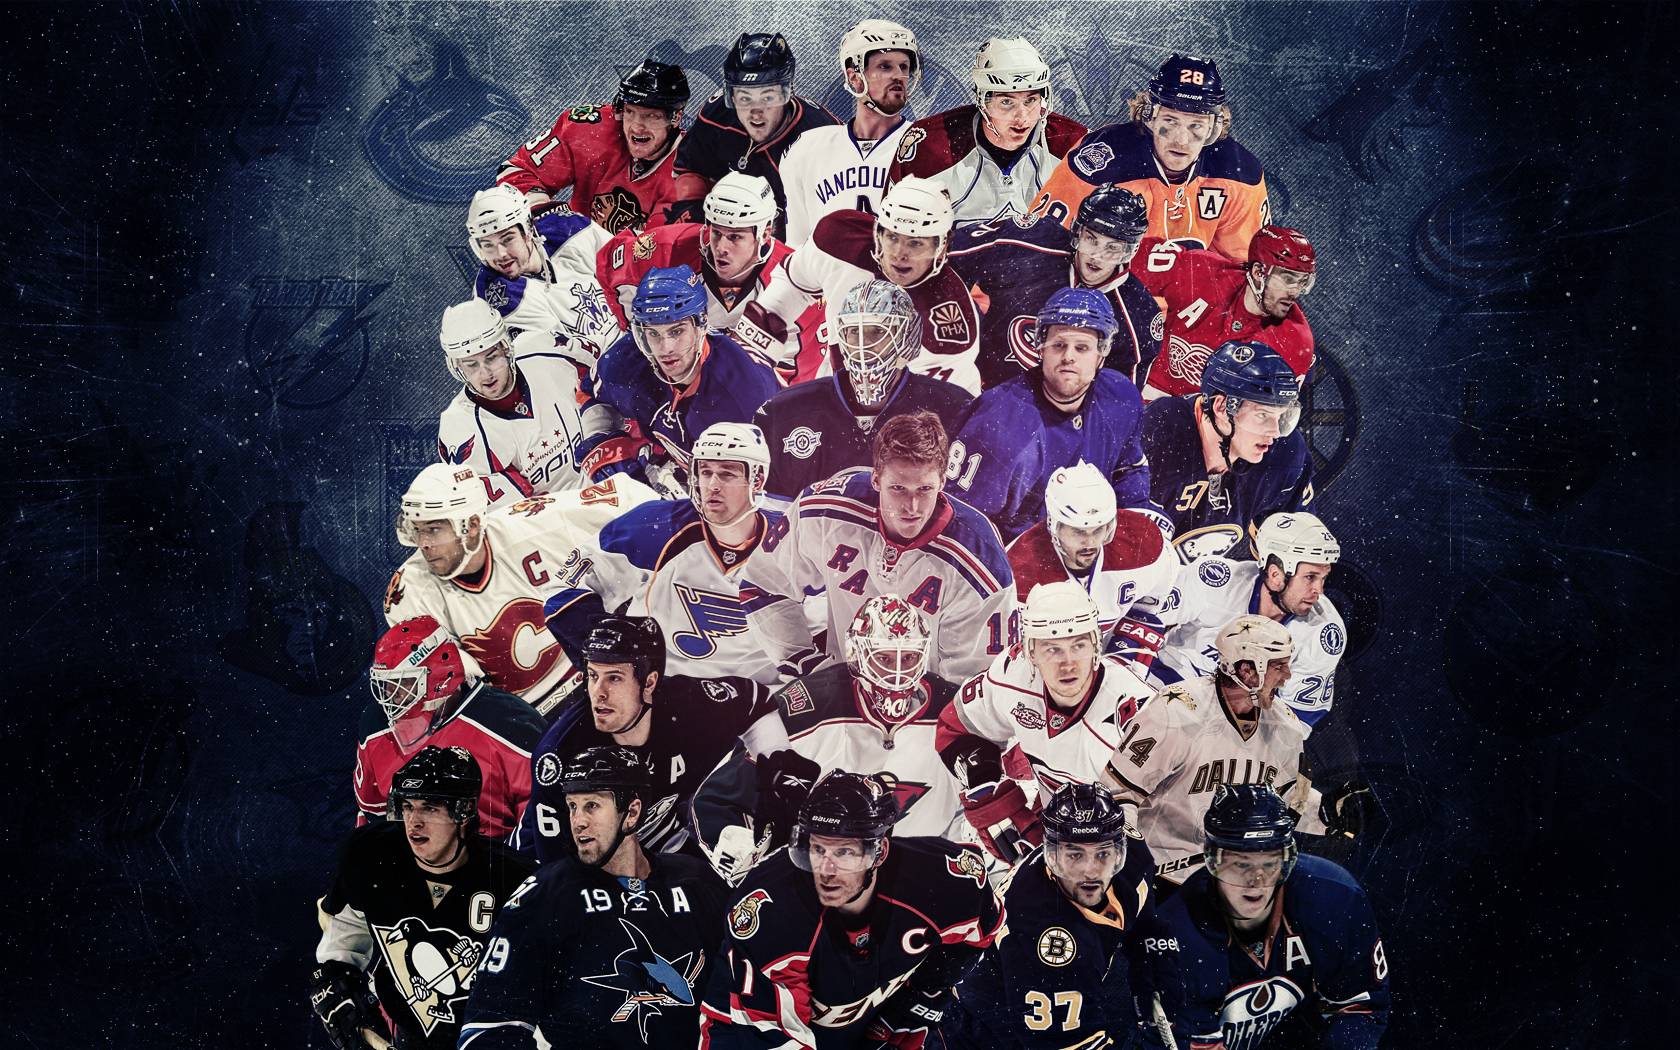 NHL Wallpaper